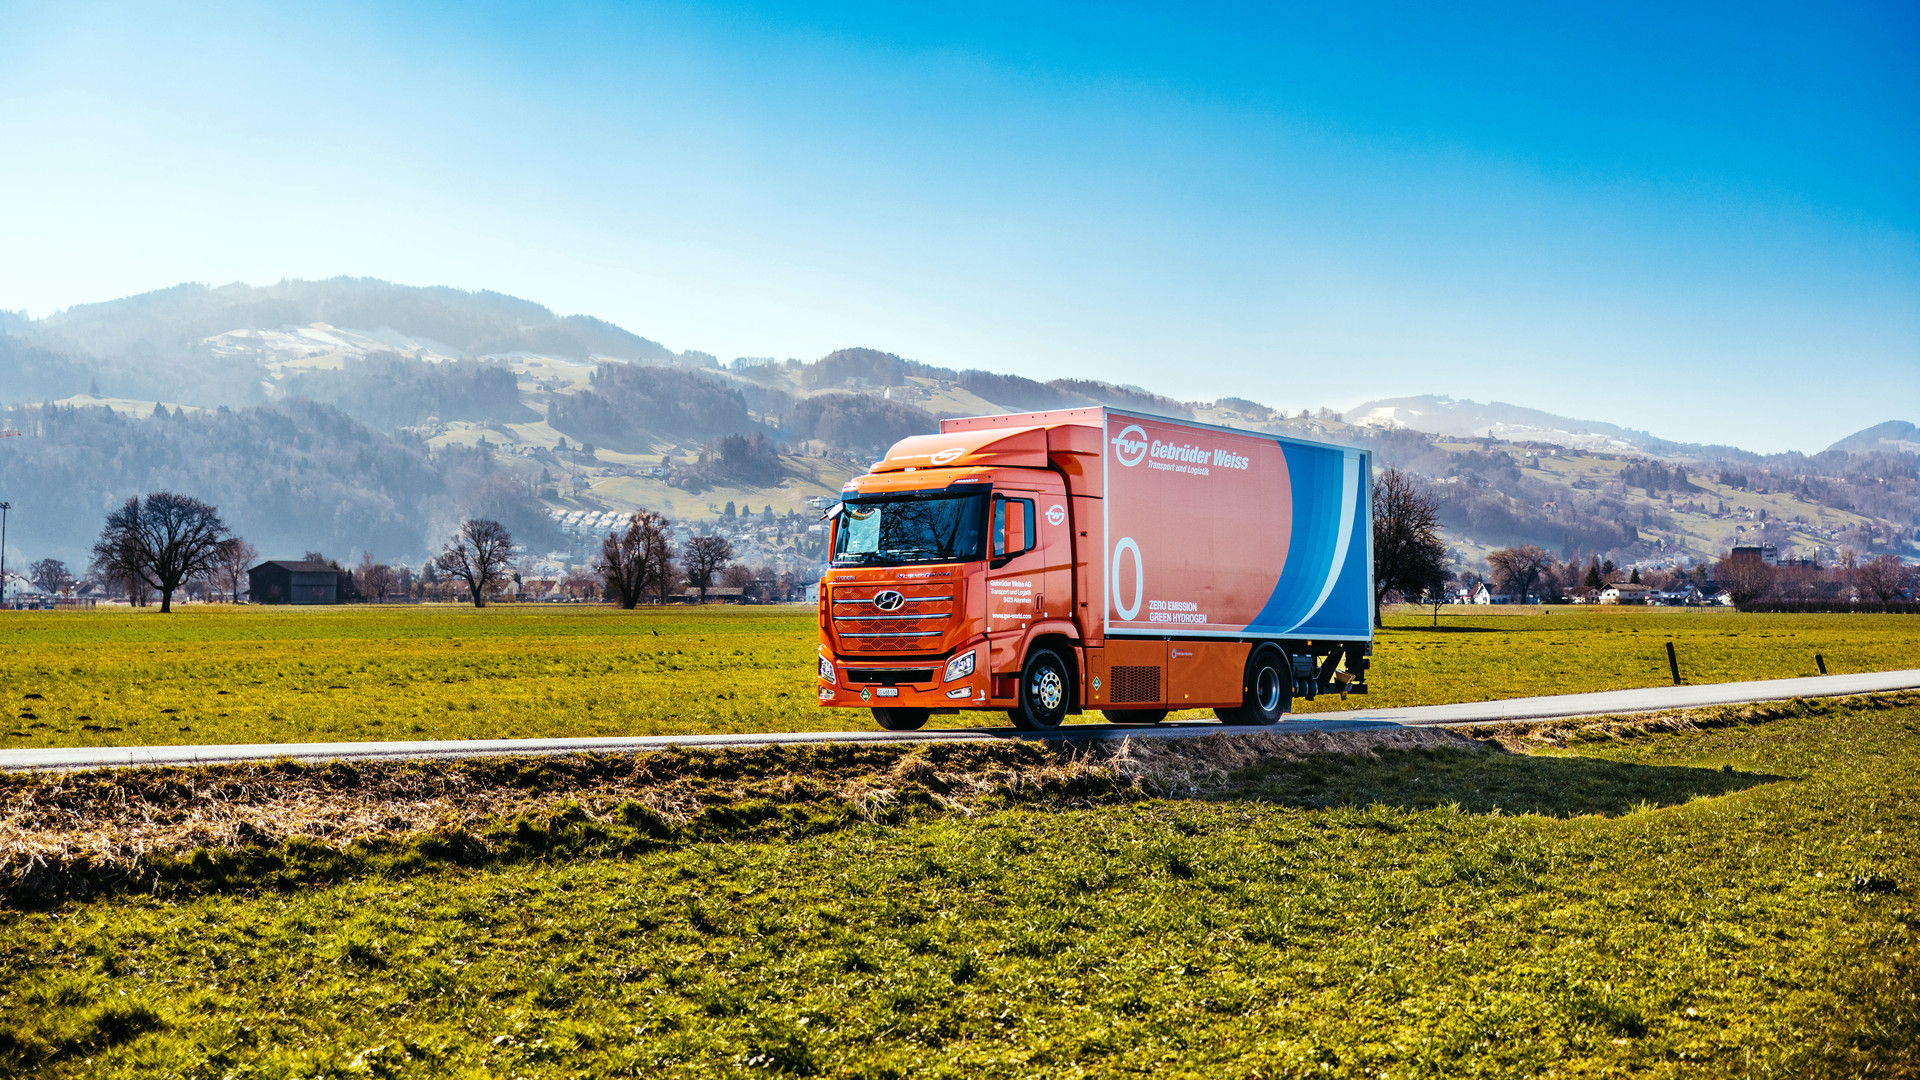 Gebrüder Weiss' hydrogen truck - one year of emission-free operations